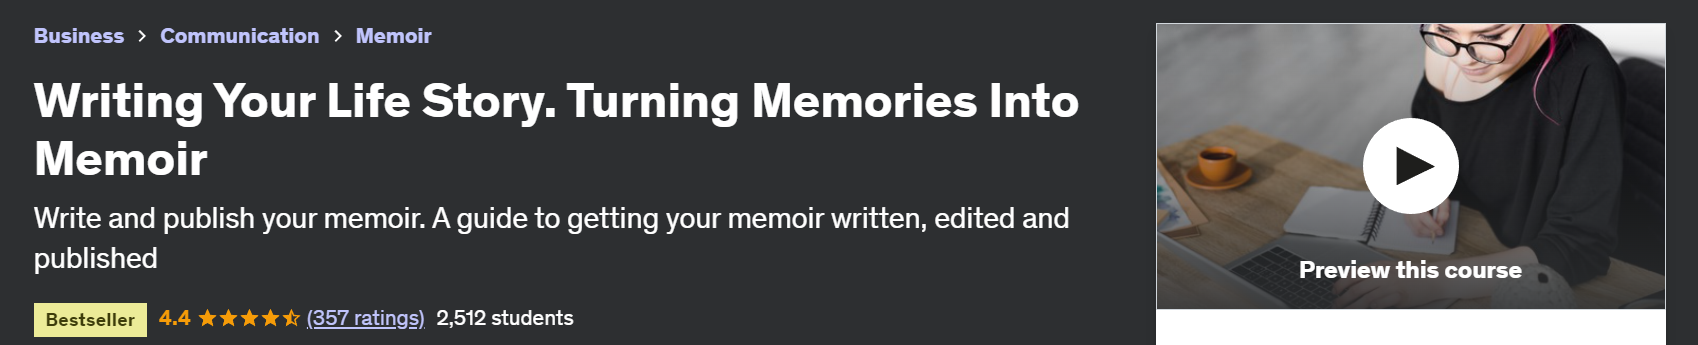 Writing Your Life Story: Turning Memories into Memoir